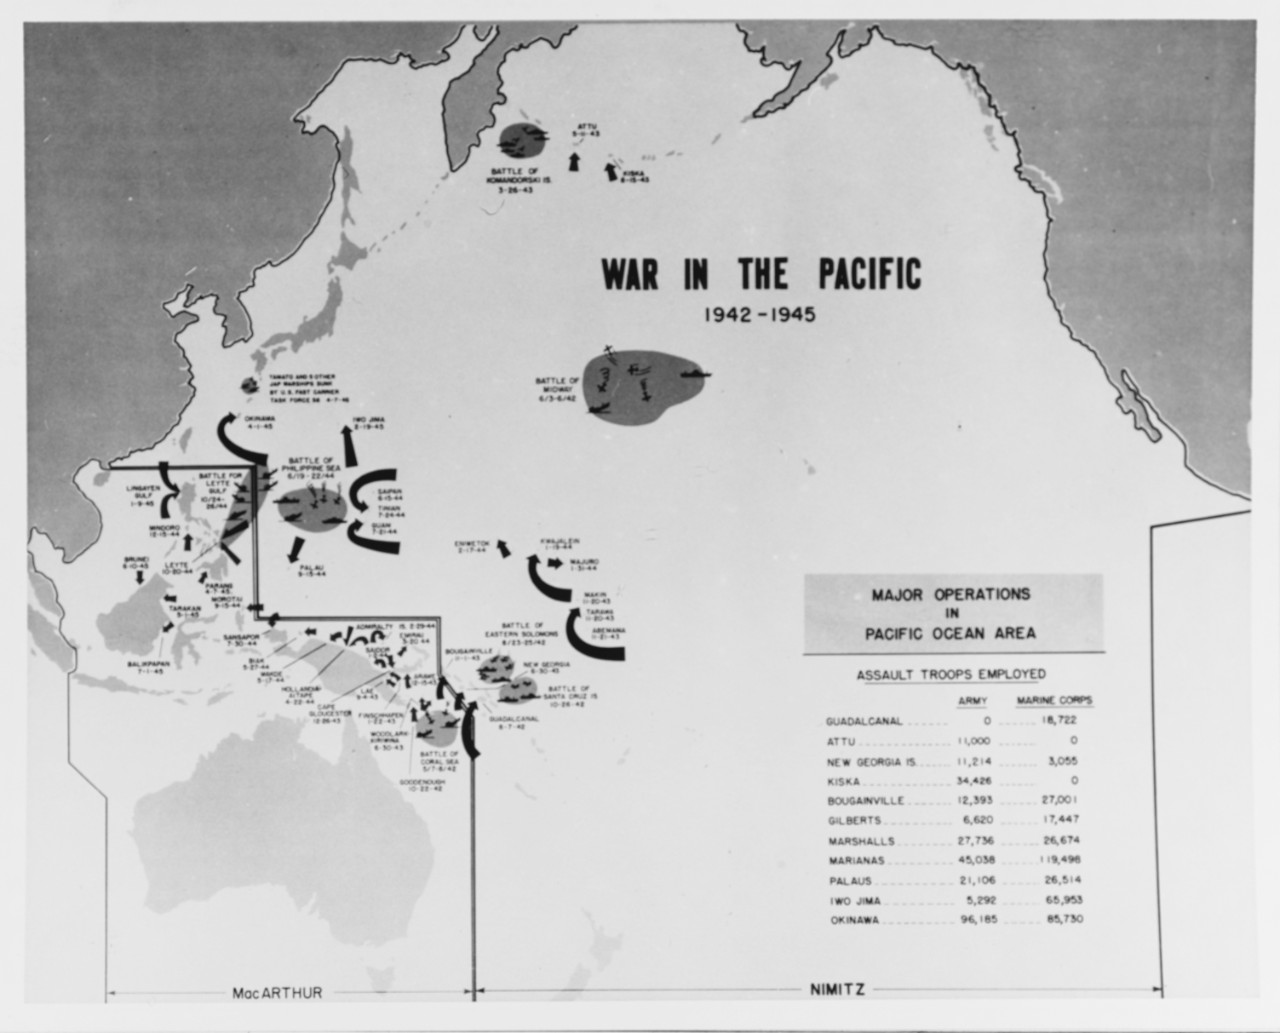 Major Operations in Pacific Ocean Area.